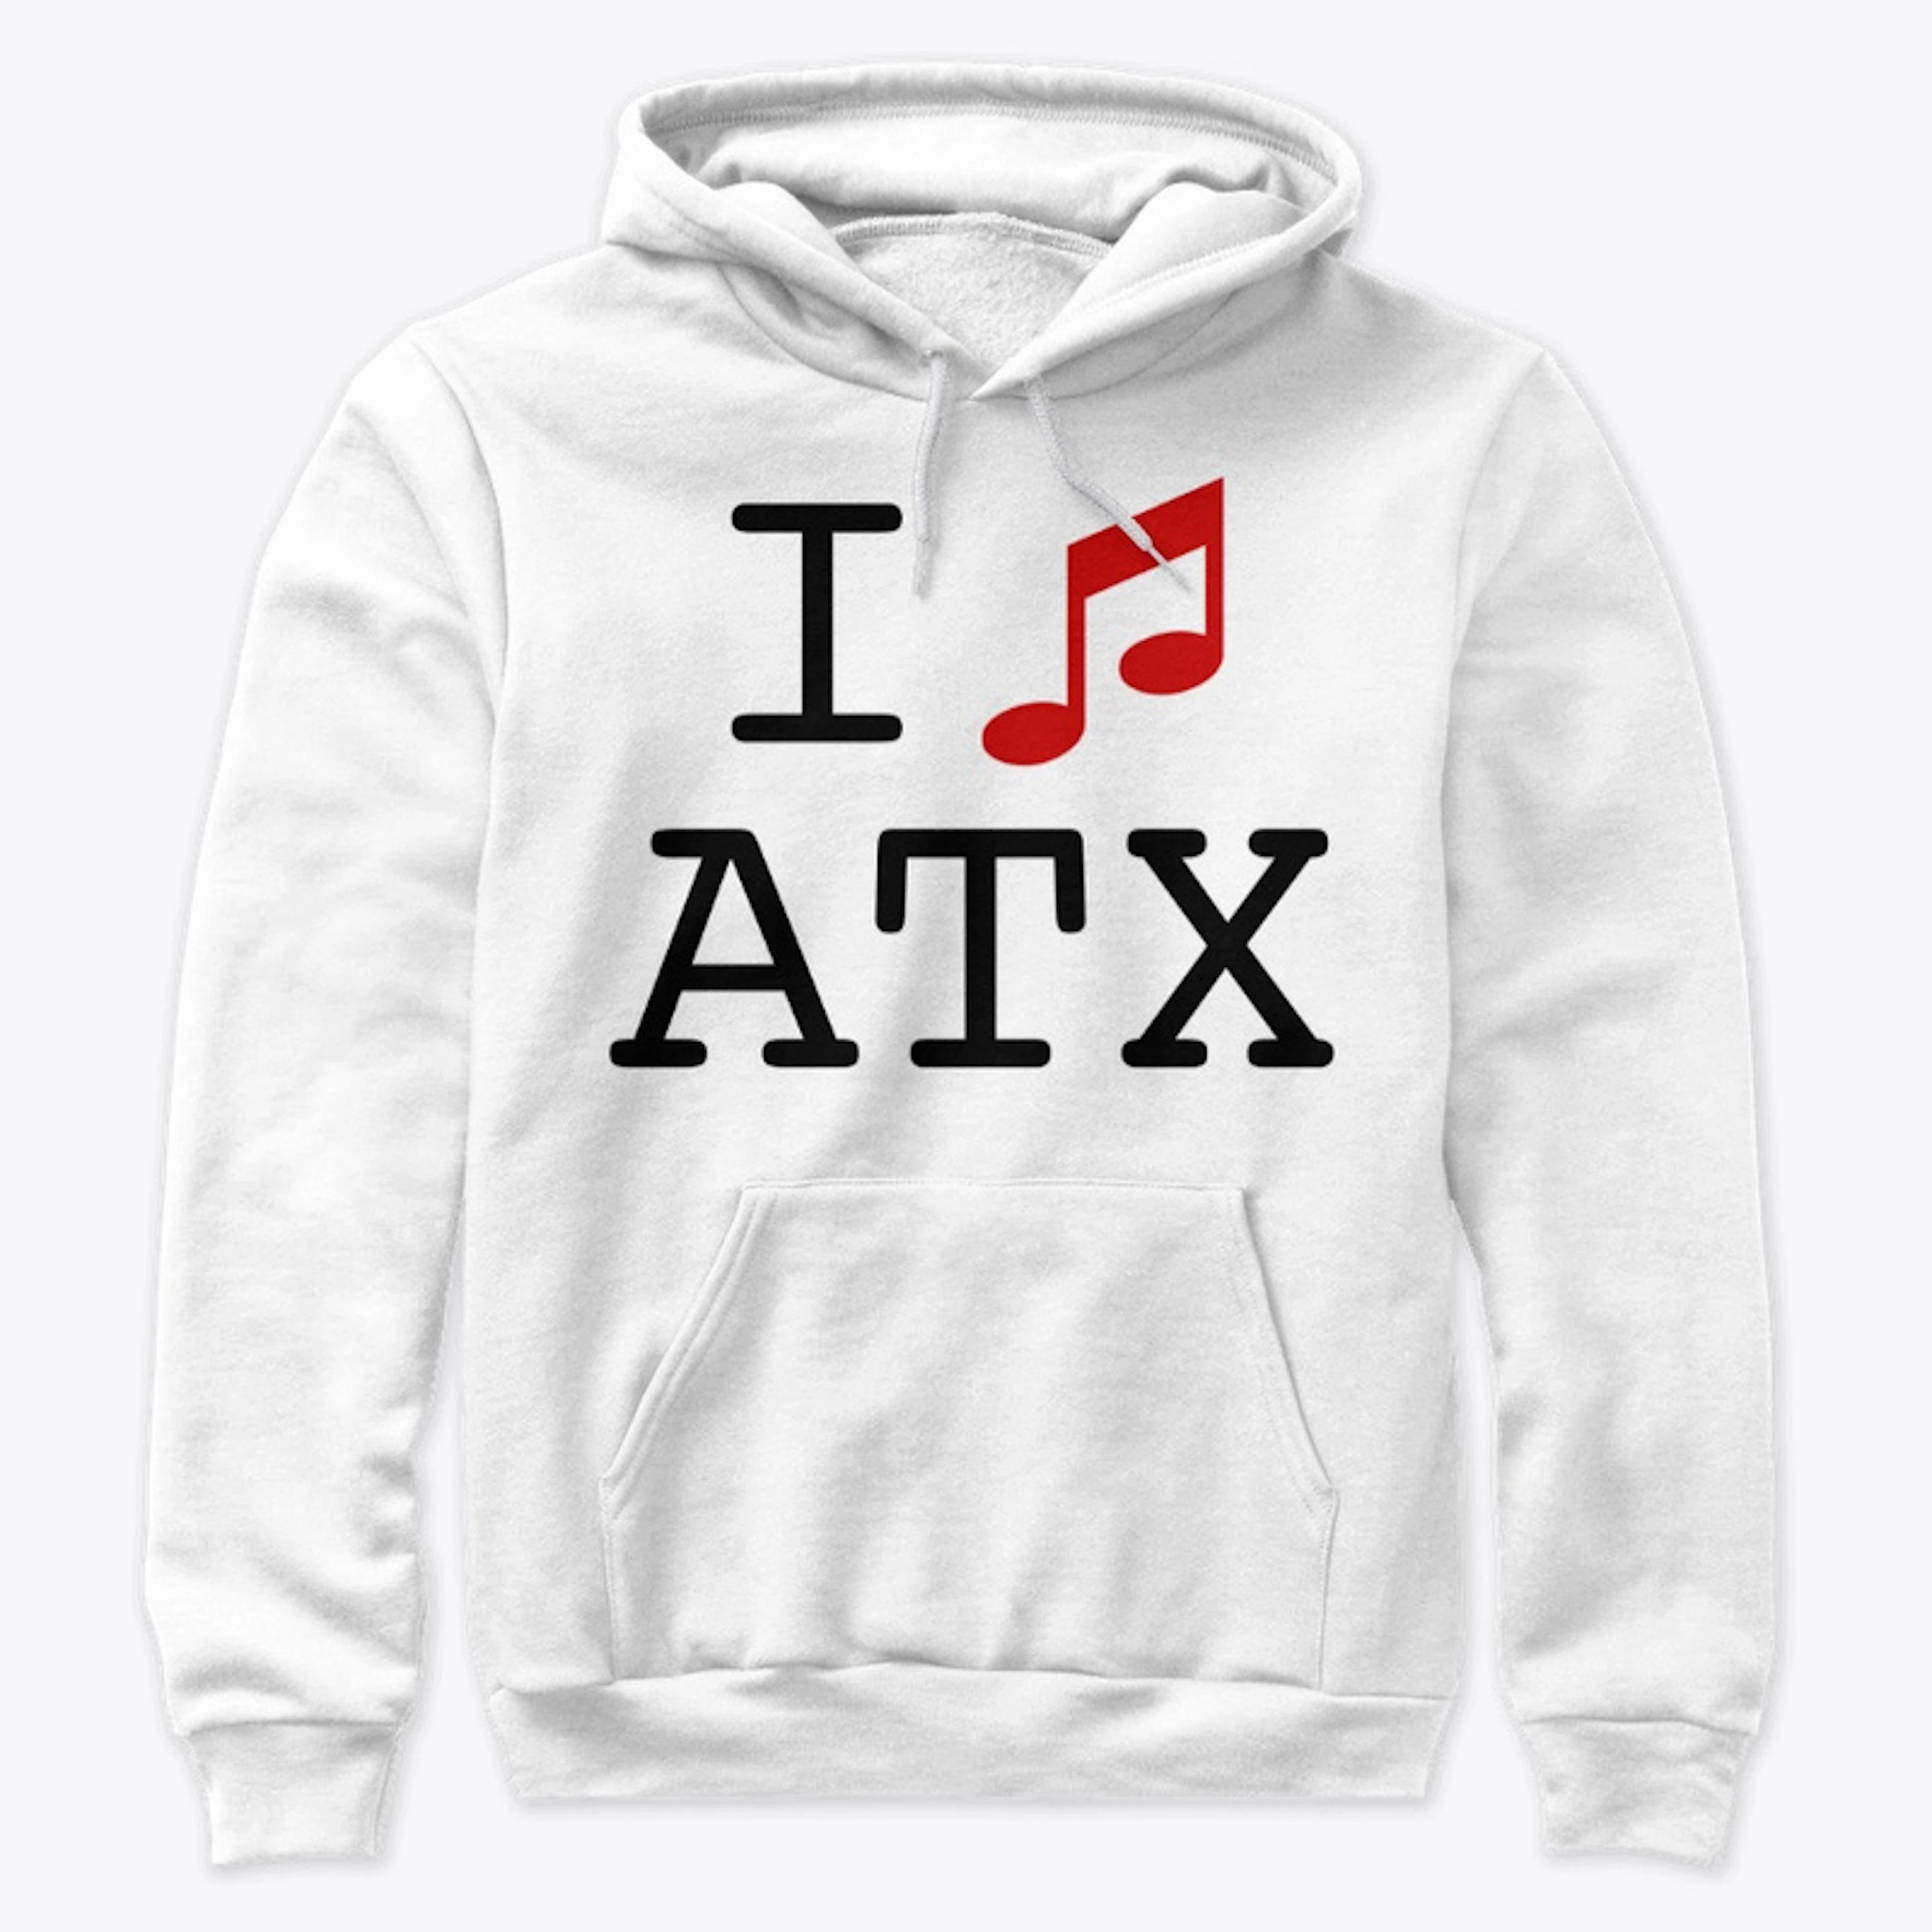 I (love) ATX